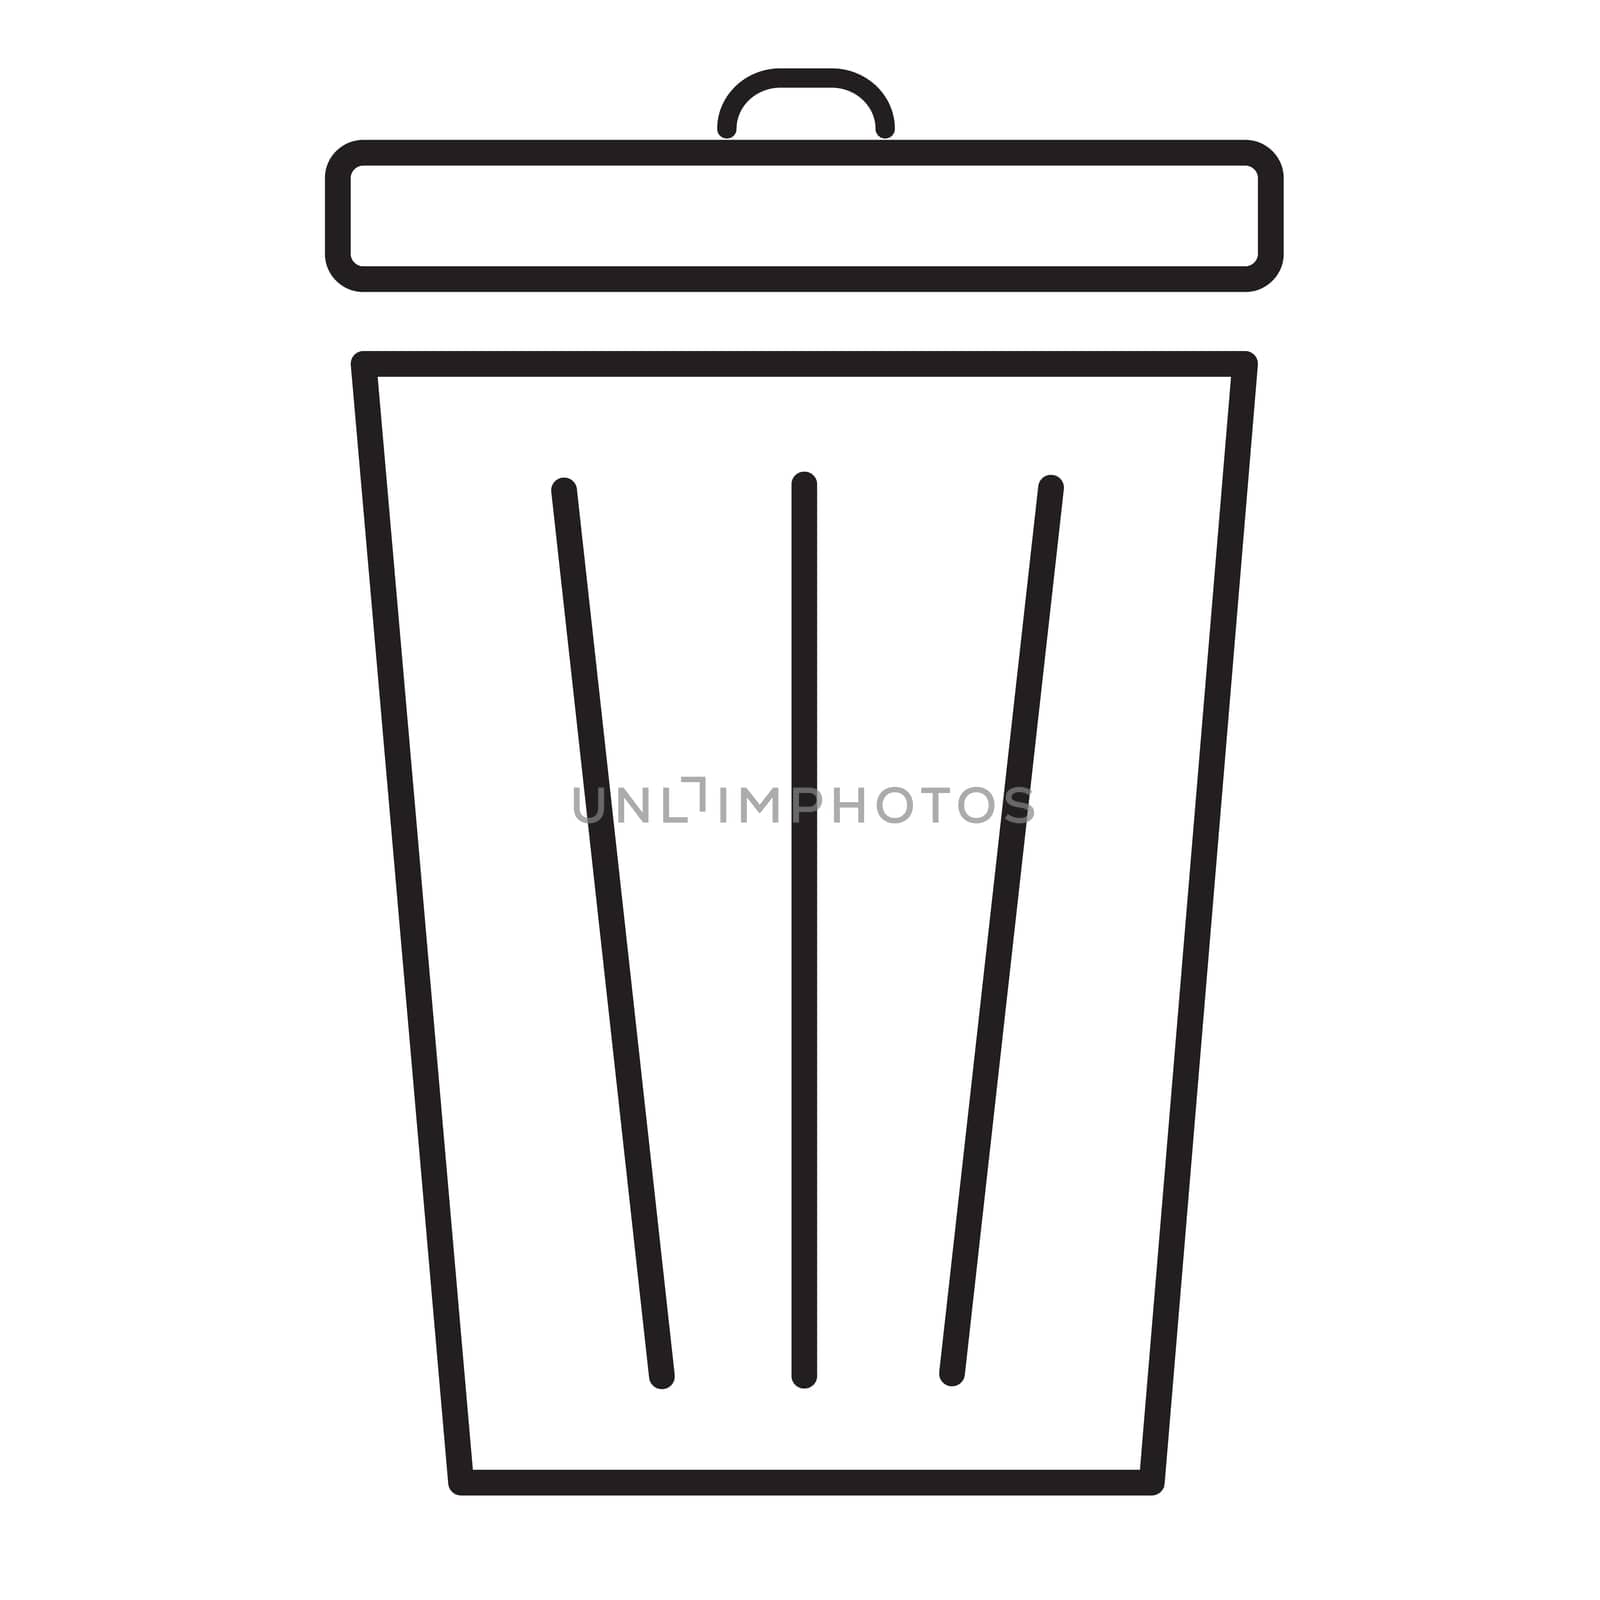 Trash icon on white background. flat style. bin icon for your web site design, logo, app, UI. bin symbol. trash sign.